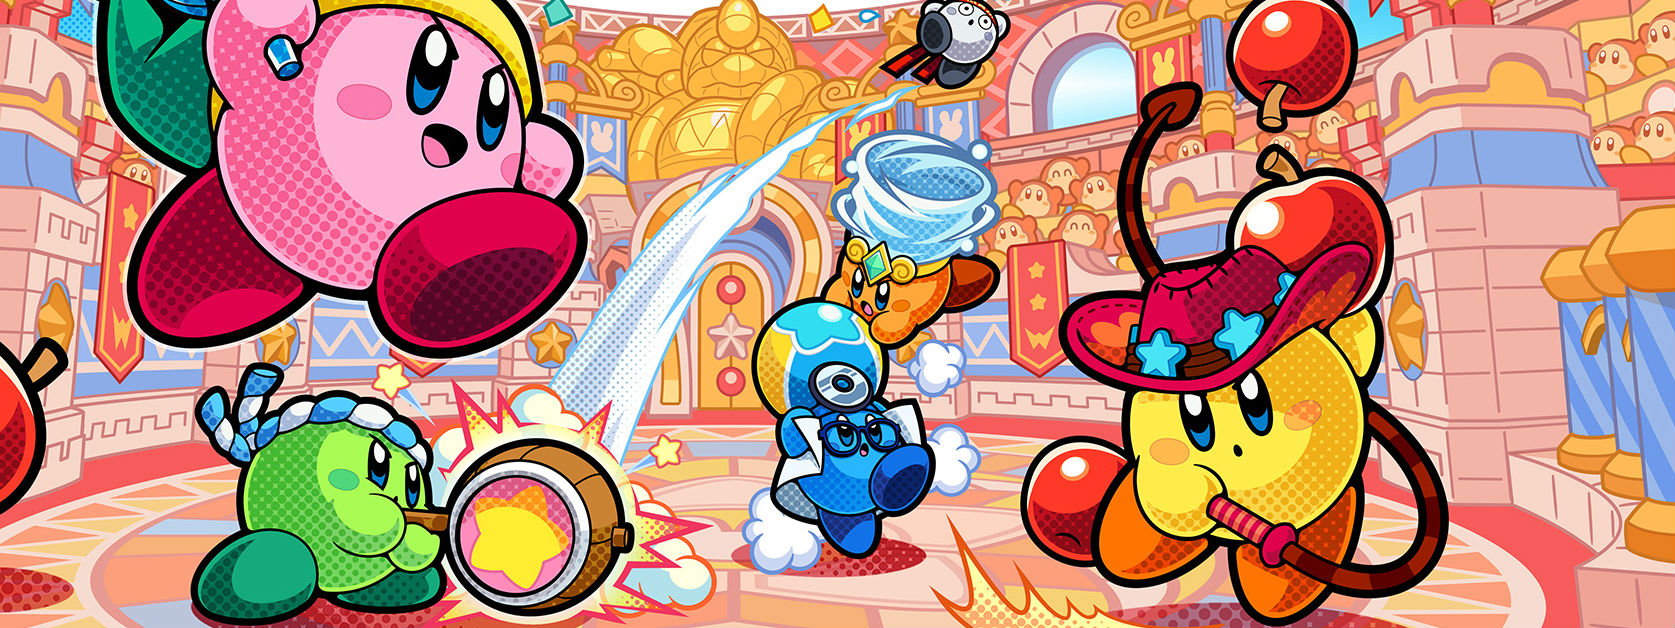 Nintendo Download: Kirby Battle Royale – Destructoid